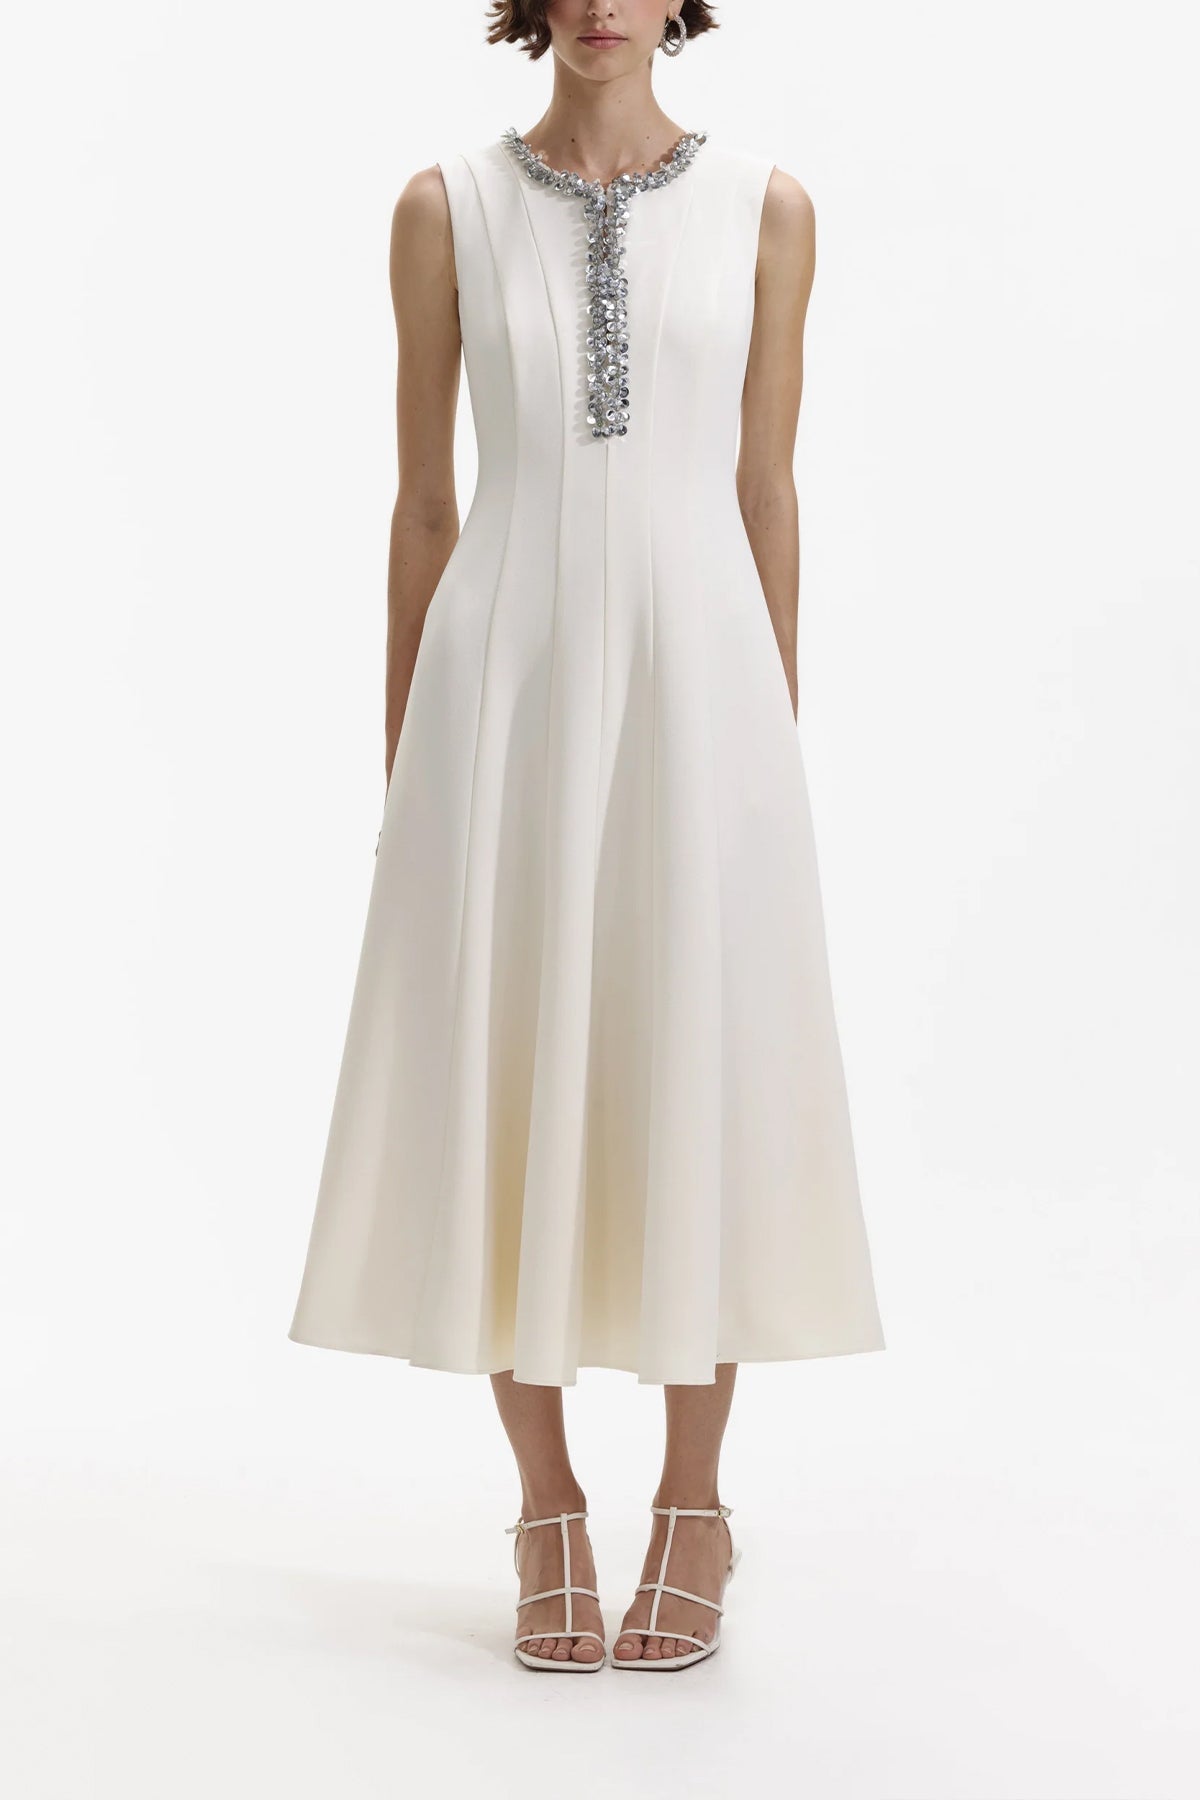 midi dresses - Buy midi dresses Online Starting at Just ₹145